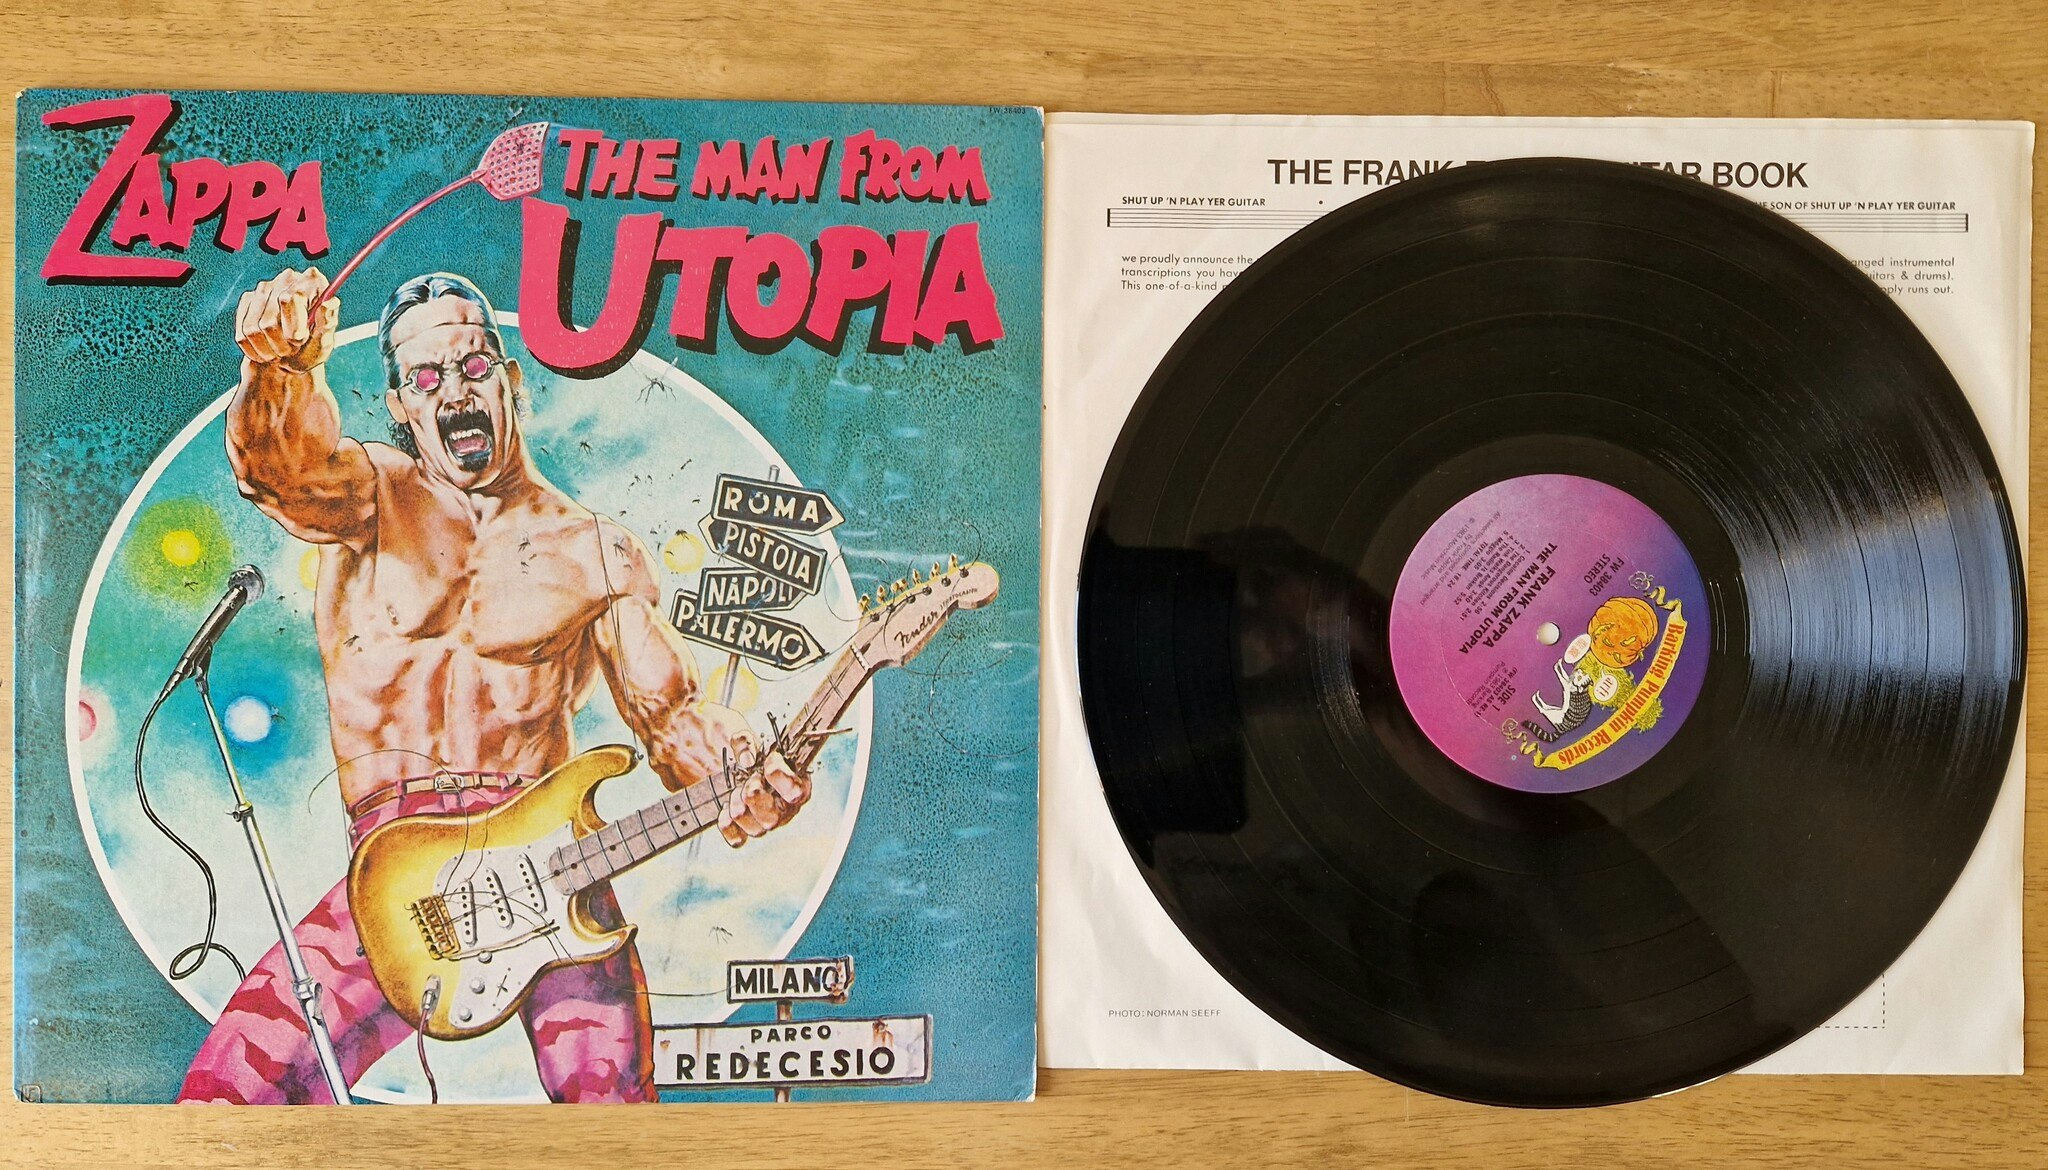 Frank Zappa, The man from utopia. Vinyl LP